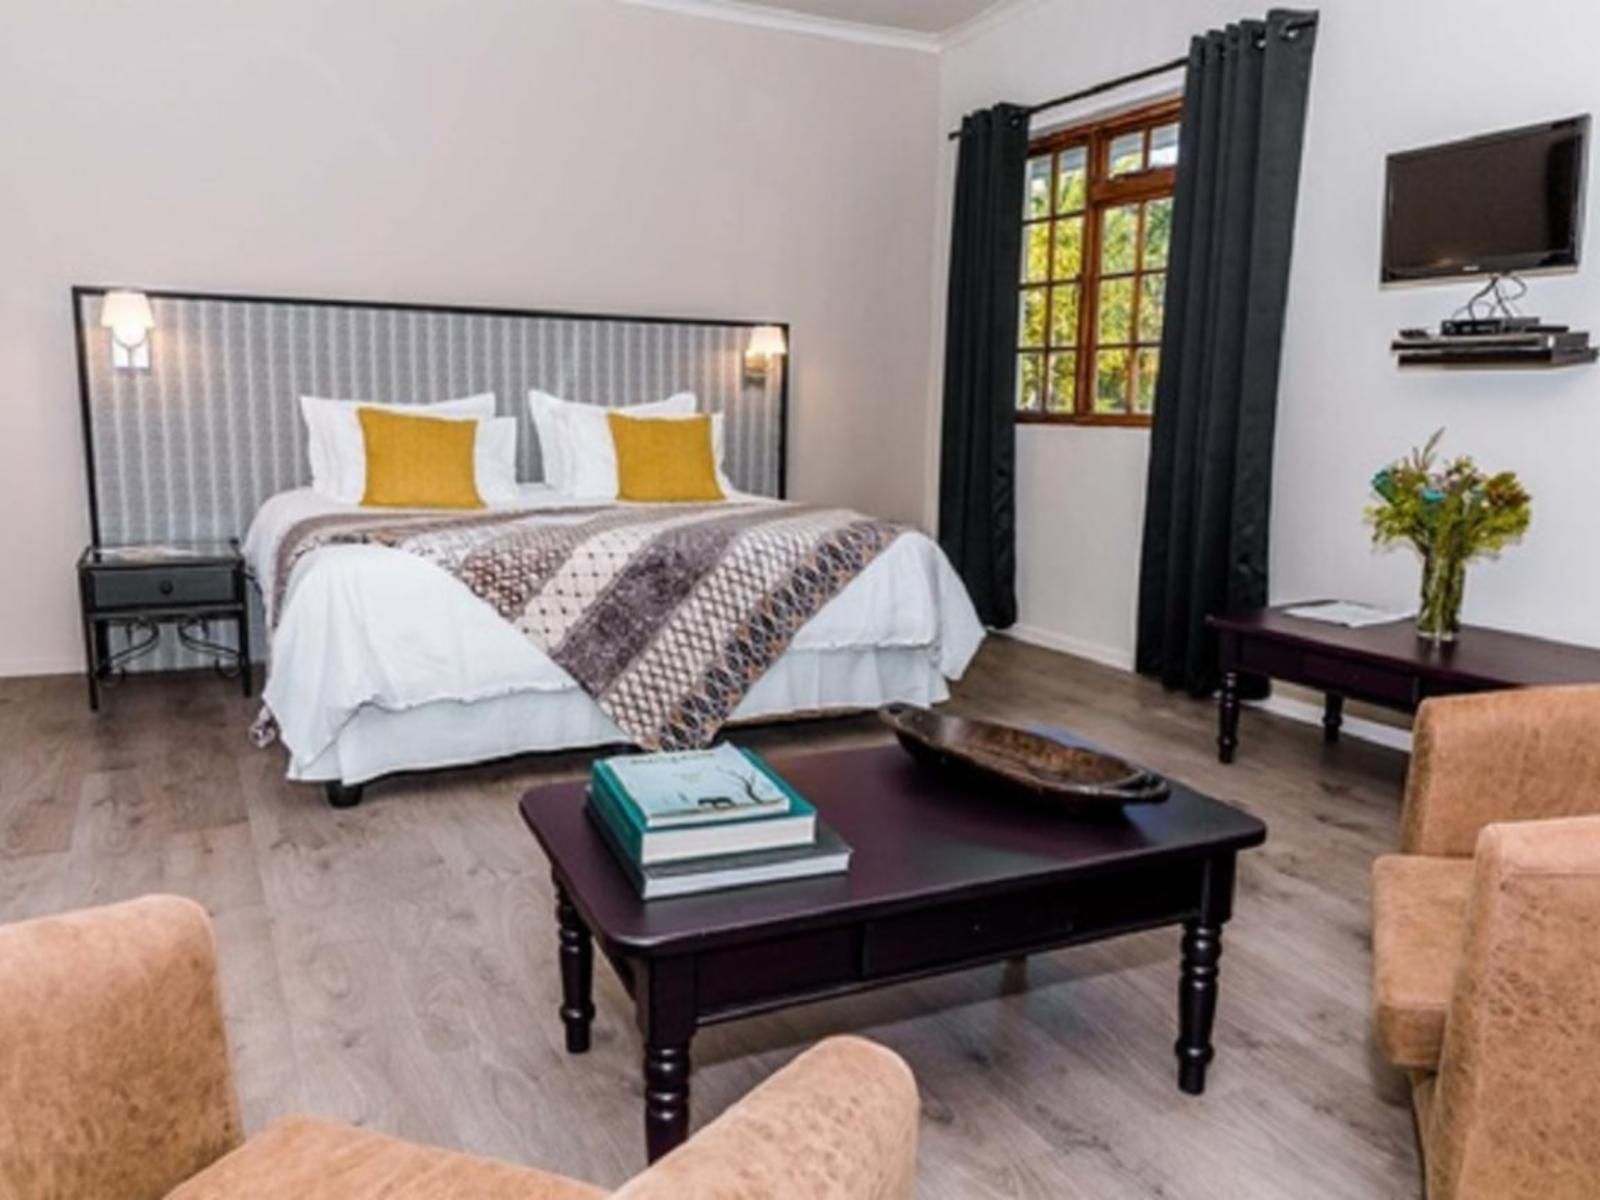 Le Petit Chateau Guest House Durbanville Cape Town Western Cape South Africa Bedroom